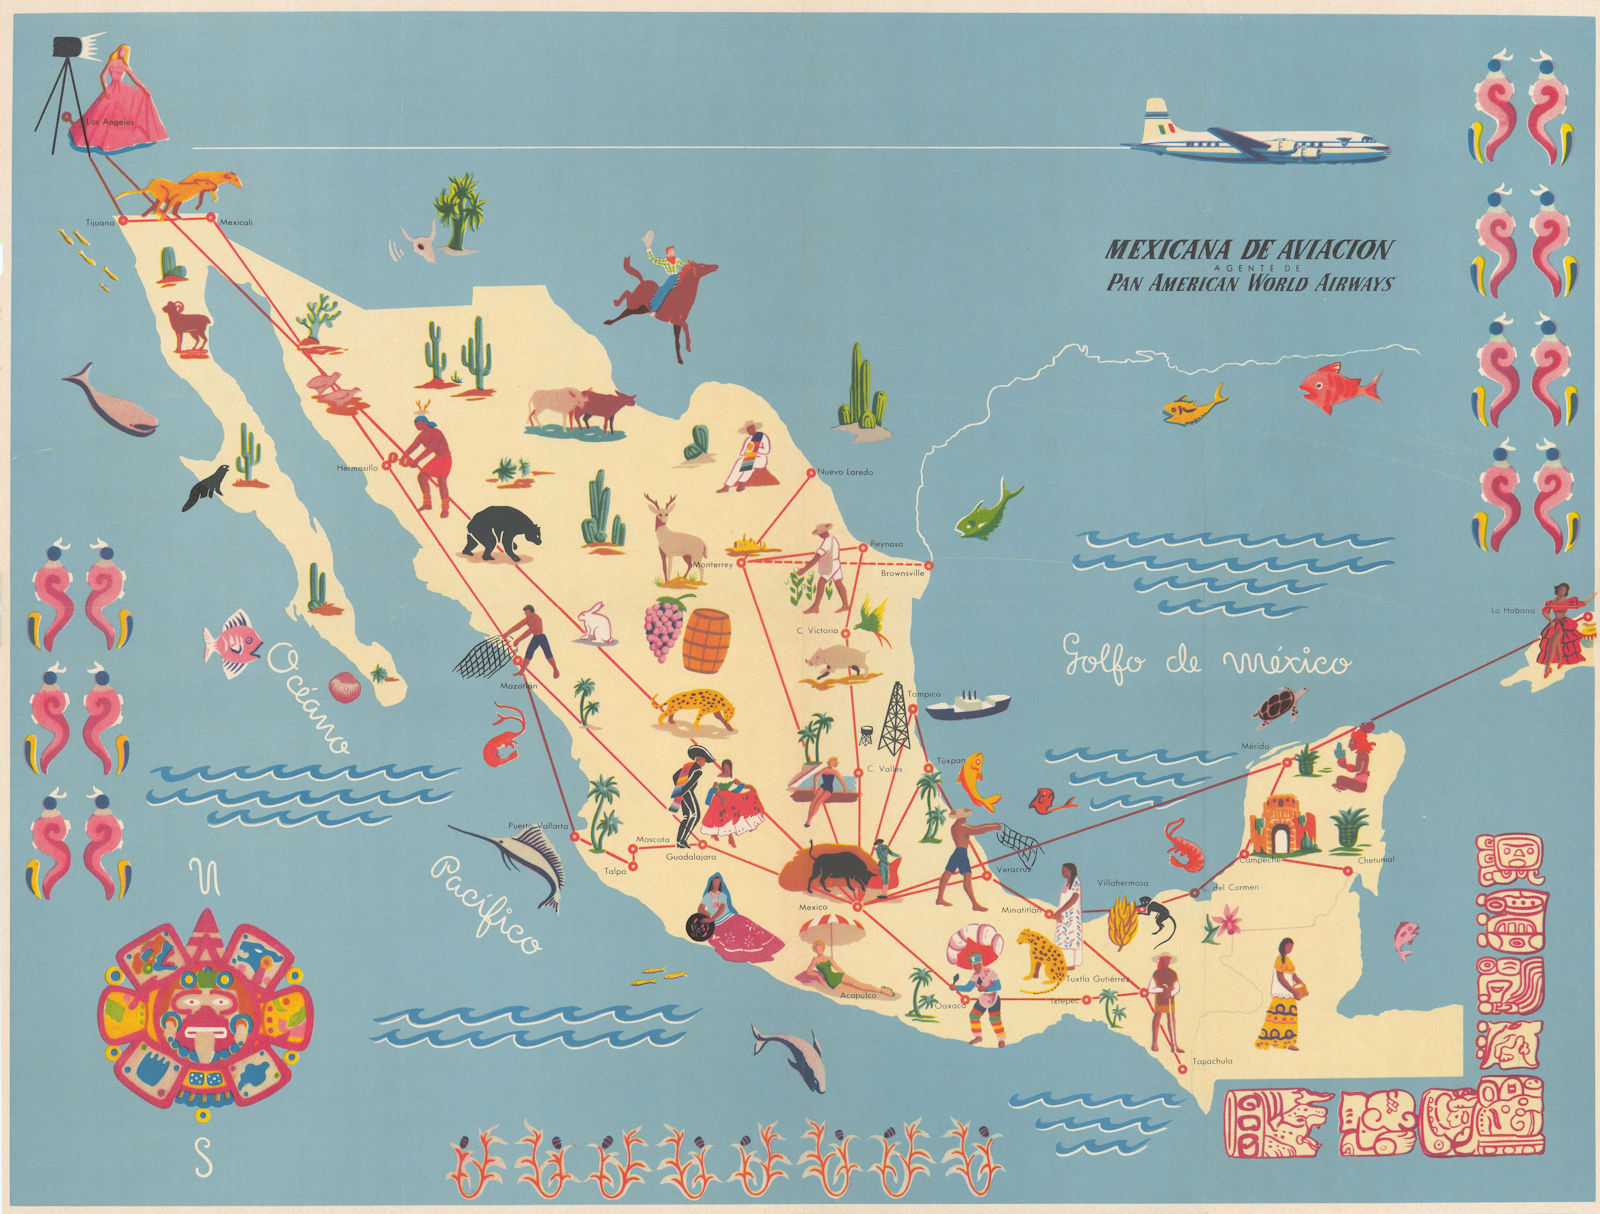 Mexicana de Aviacion. Pictorial airline network route map 17"x23". Mexico c1950